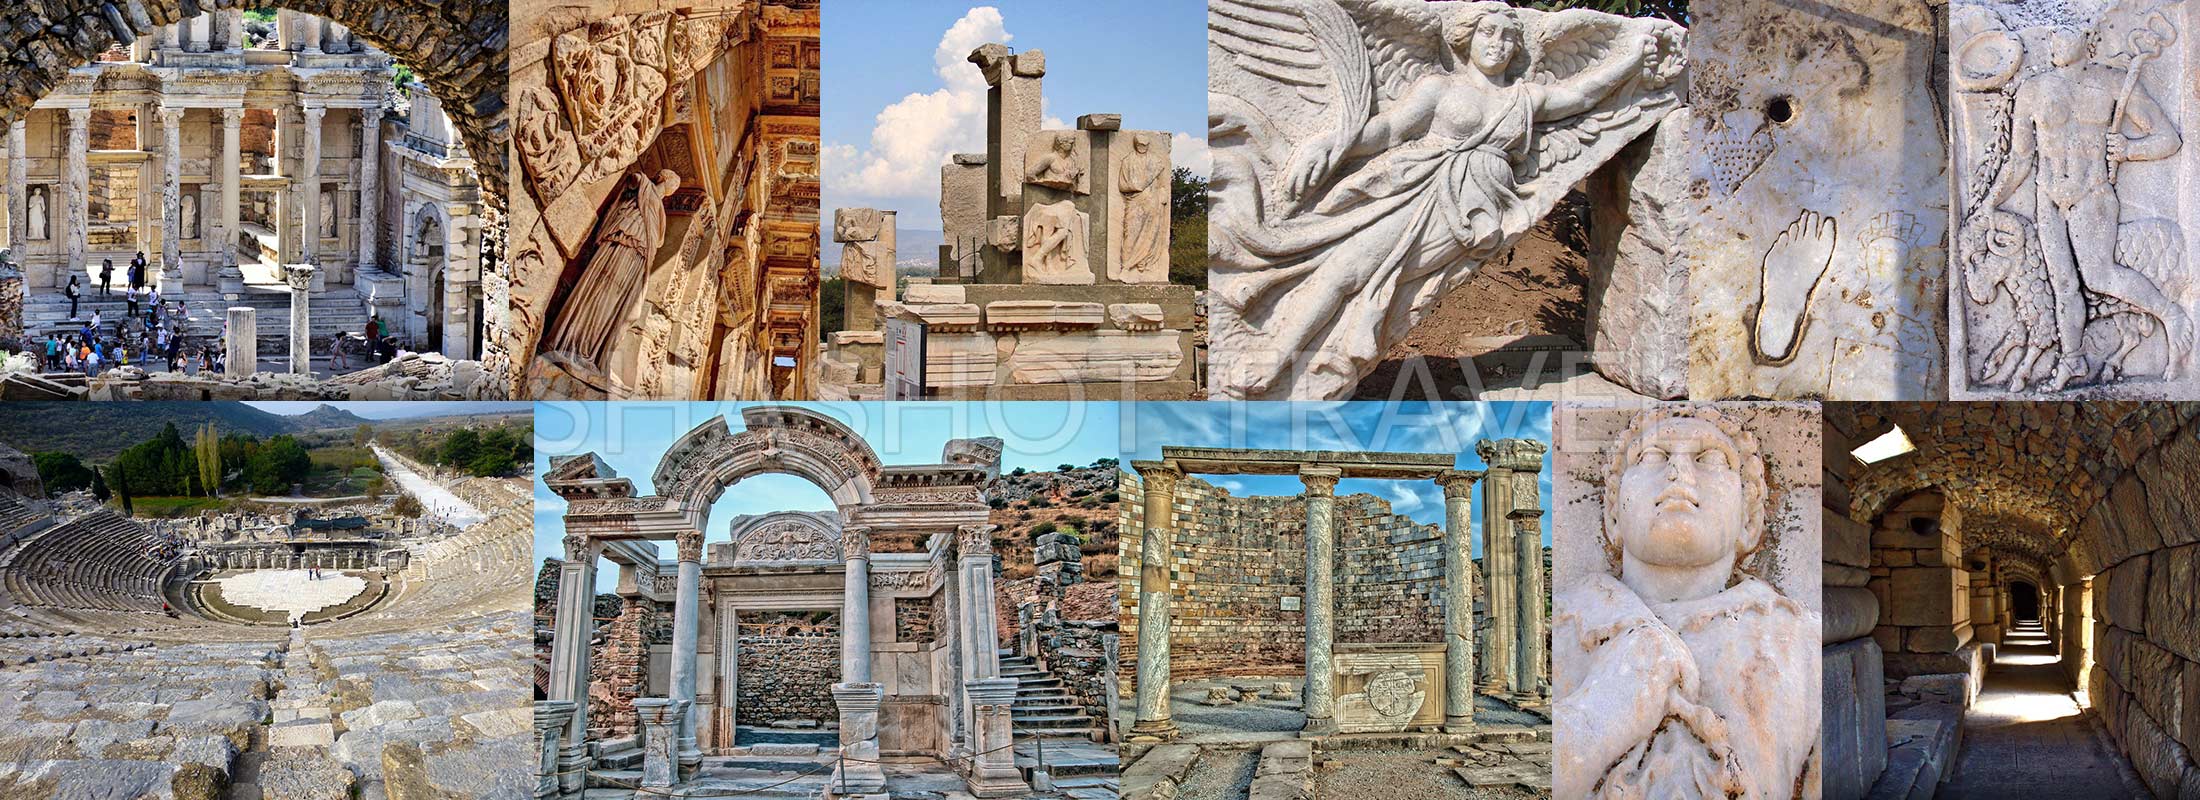 estambul-pergamo-troya-efeso-sirince-pamukkale-hierapolis-atenas-samos-mykonos-santorini-grecia-turquia-excursion-tours